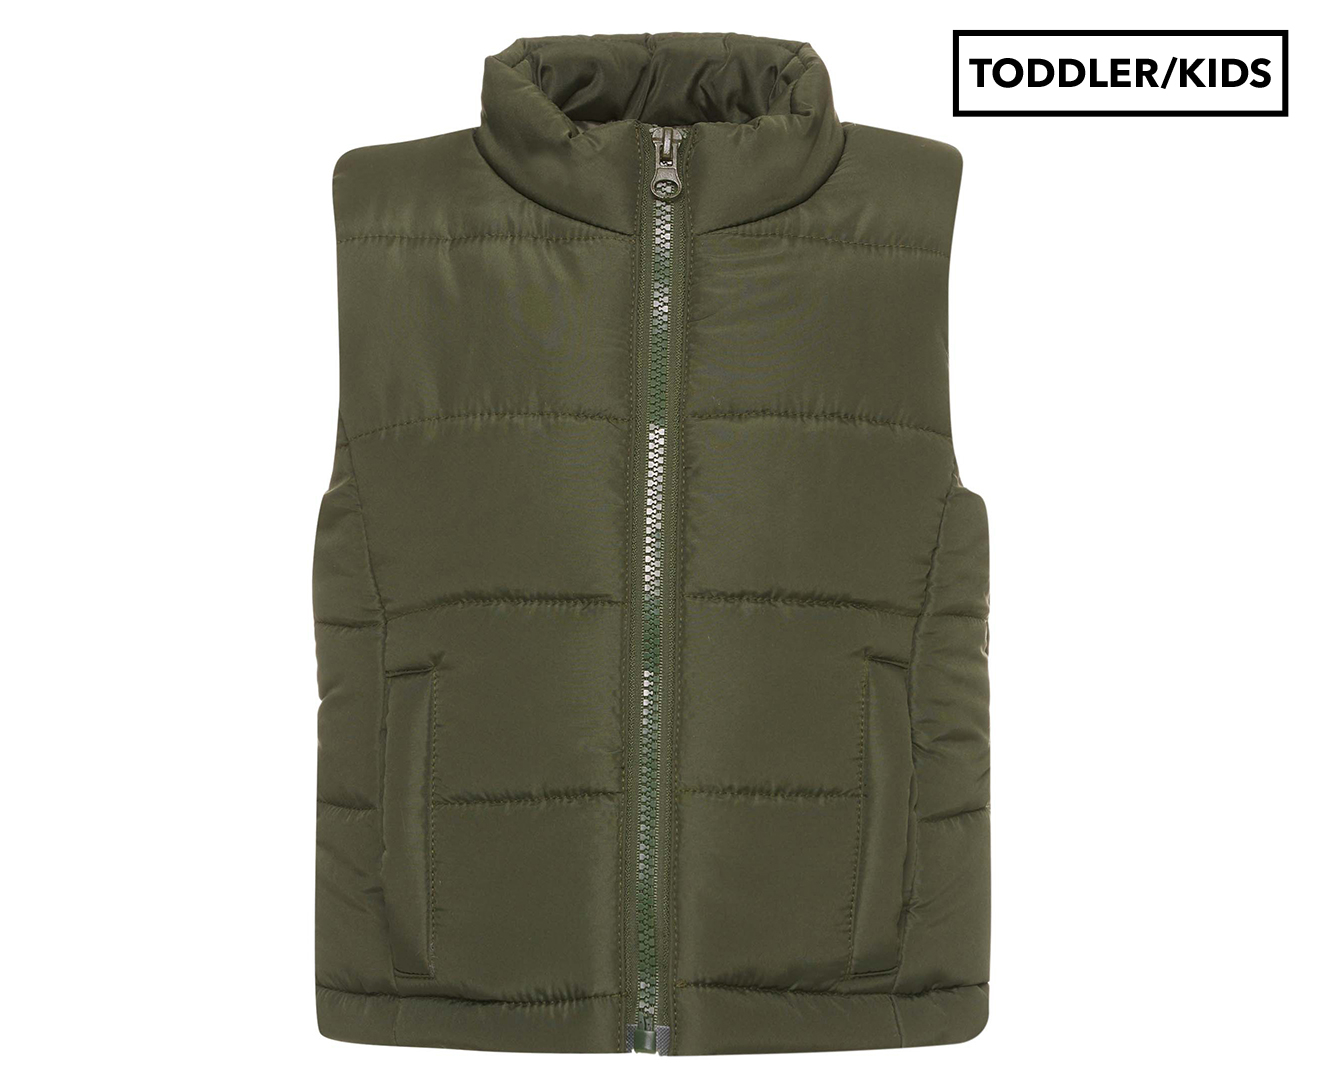 KIDS FASHION Jackets Elegant discount 68% Tommy Hilfiger waterproof jacket Pink 10Y 